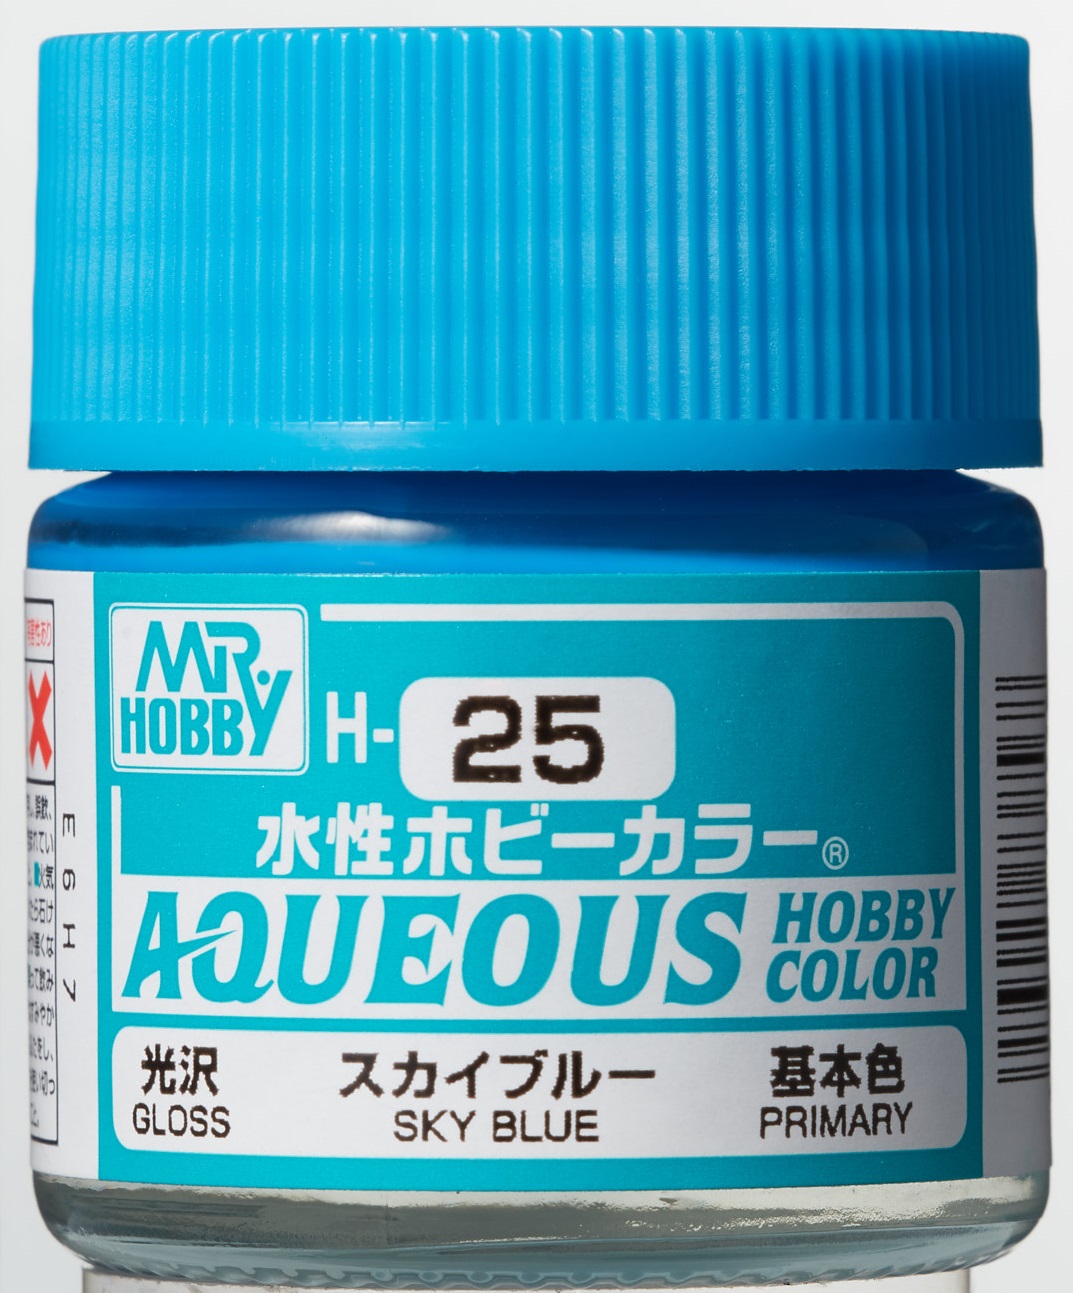 Mr. Aqueous Hobby Color - Sky Blue - H25 - Himmelblau